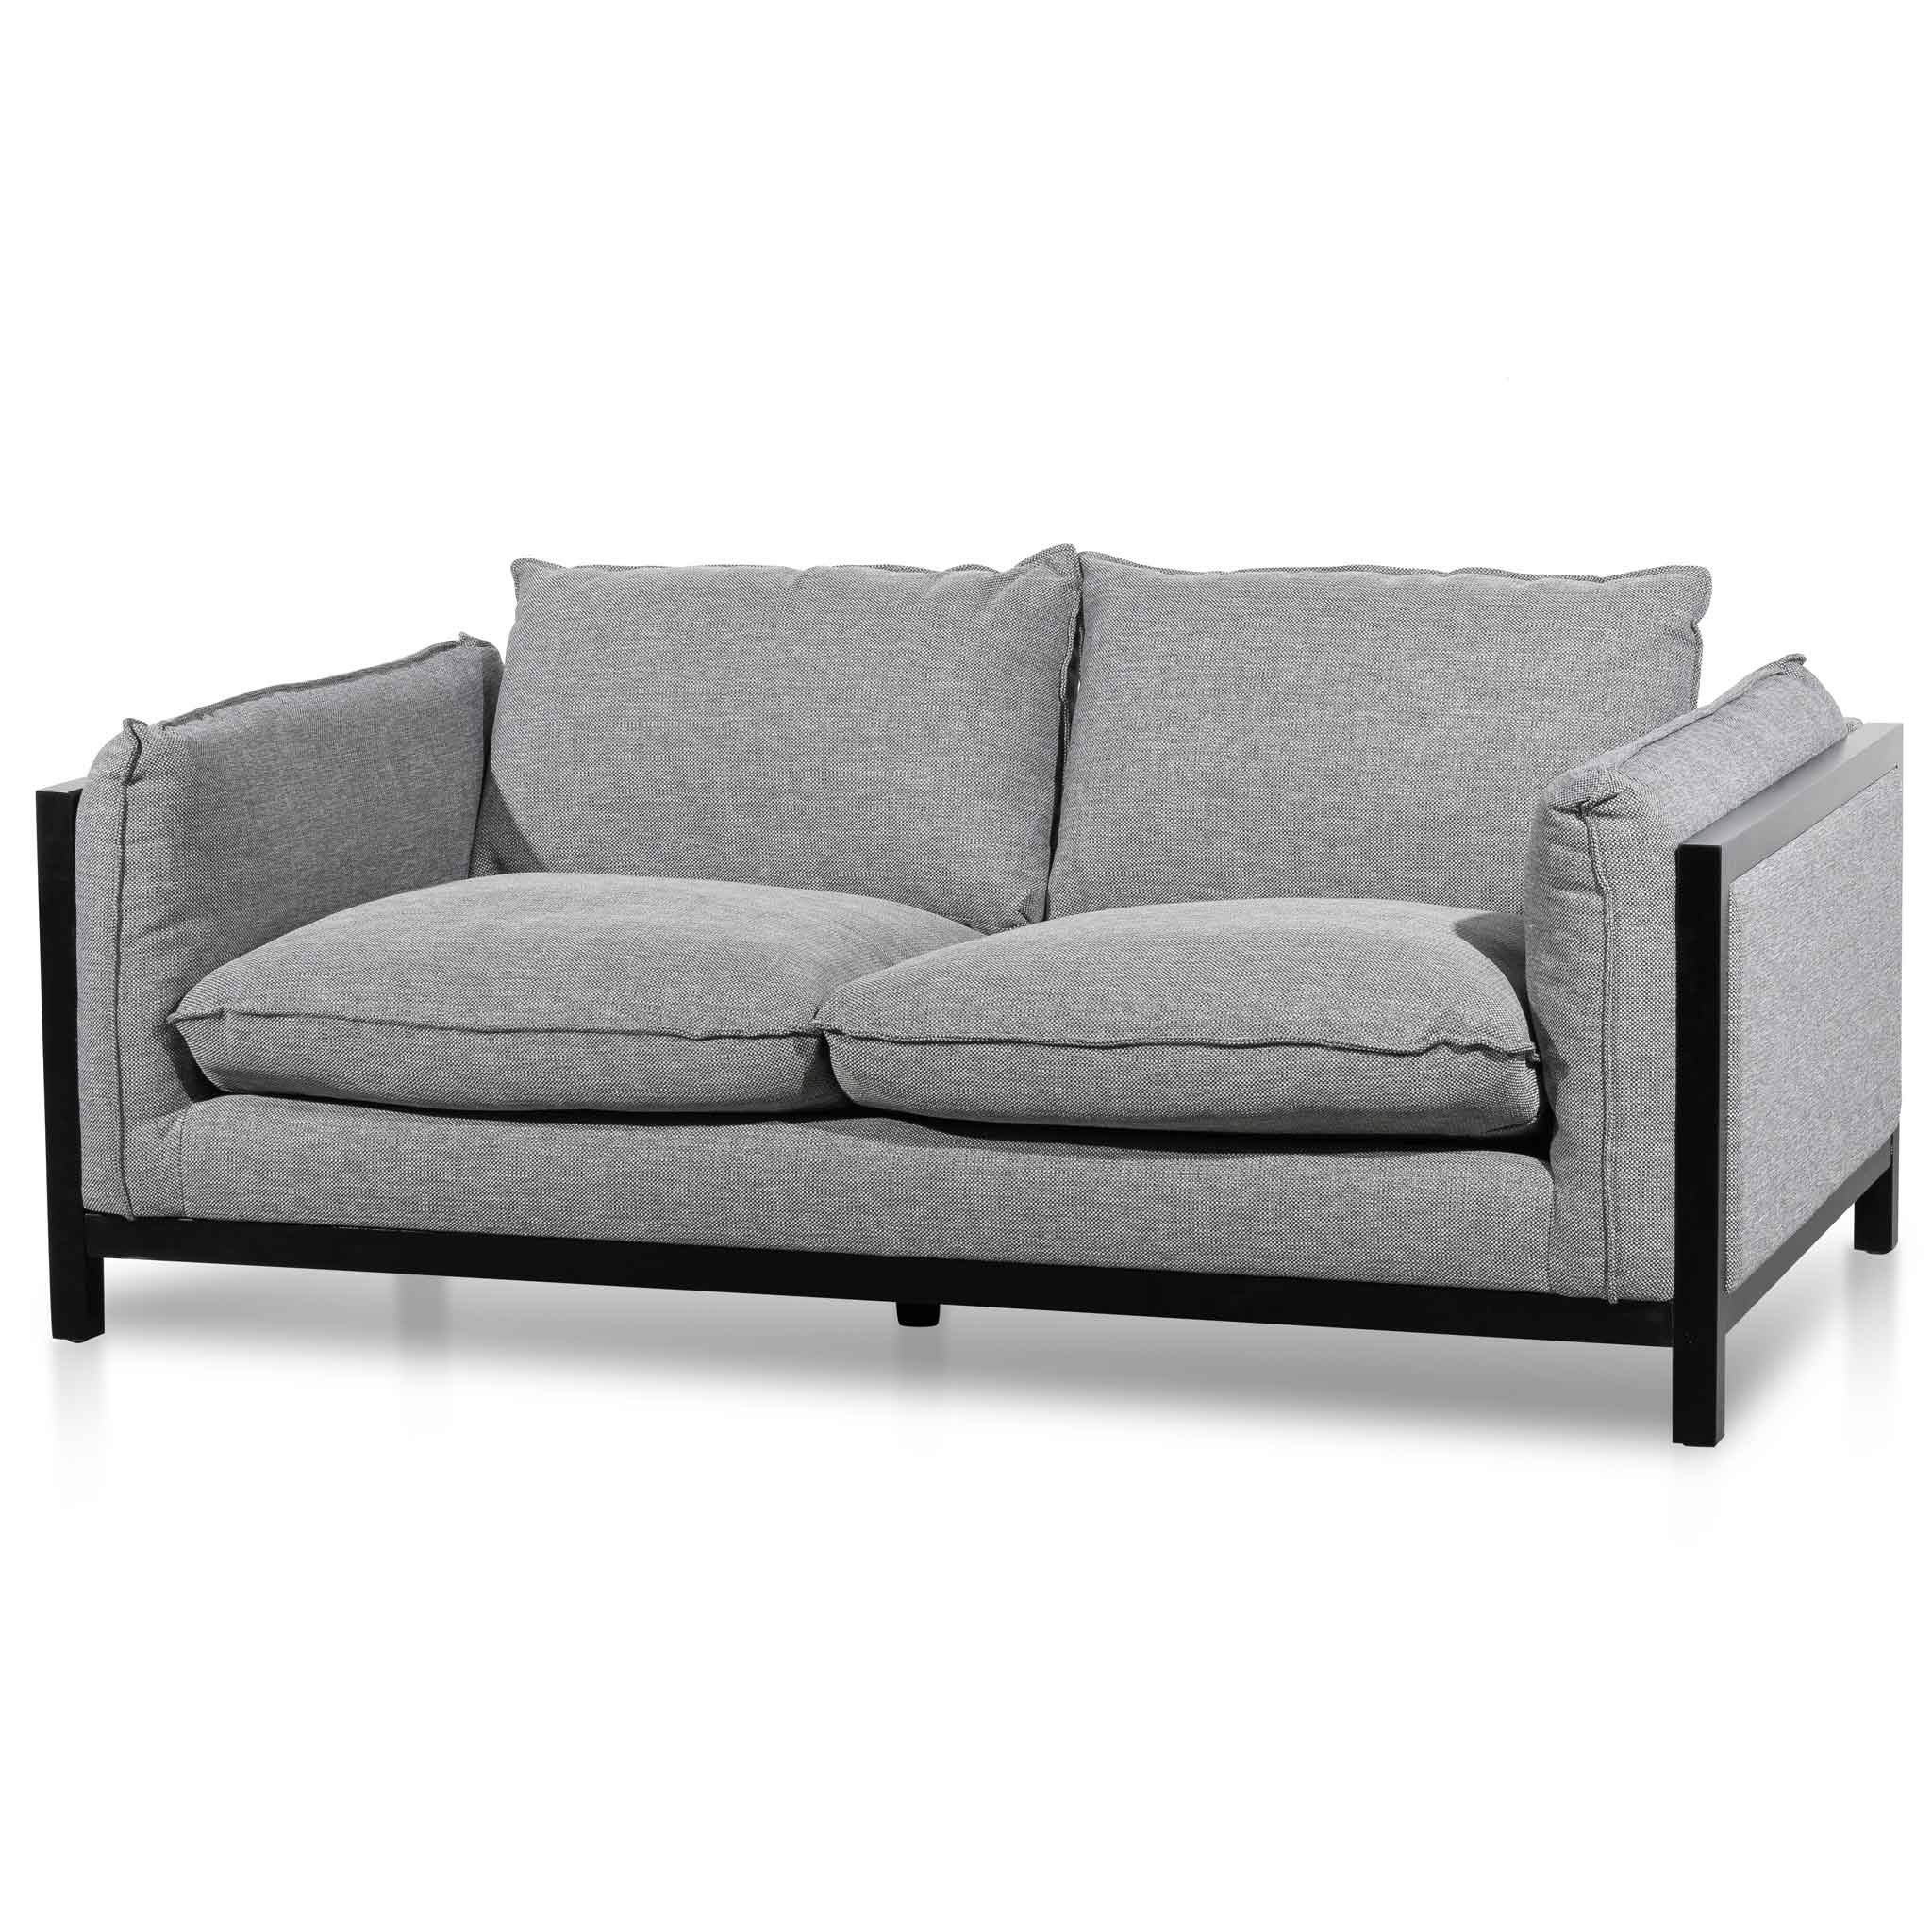 Hailey 2 Seater Fabric Sofa - Graphite Grey